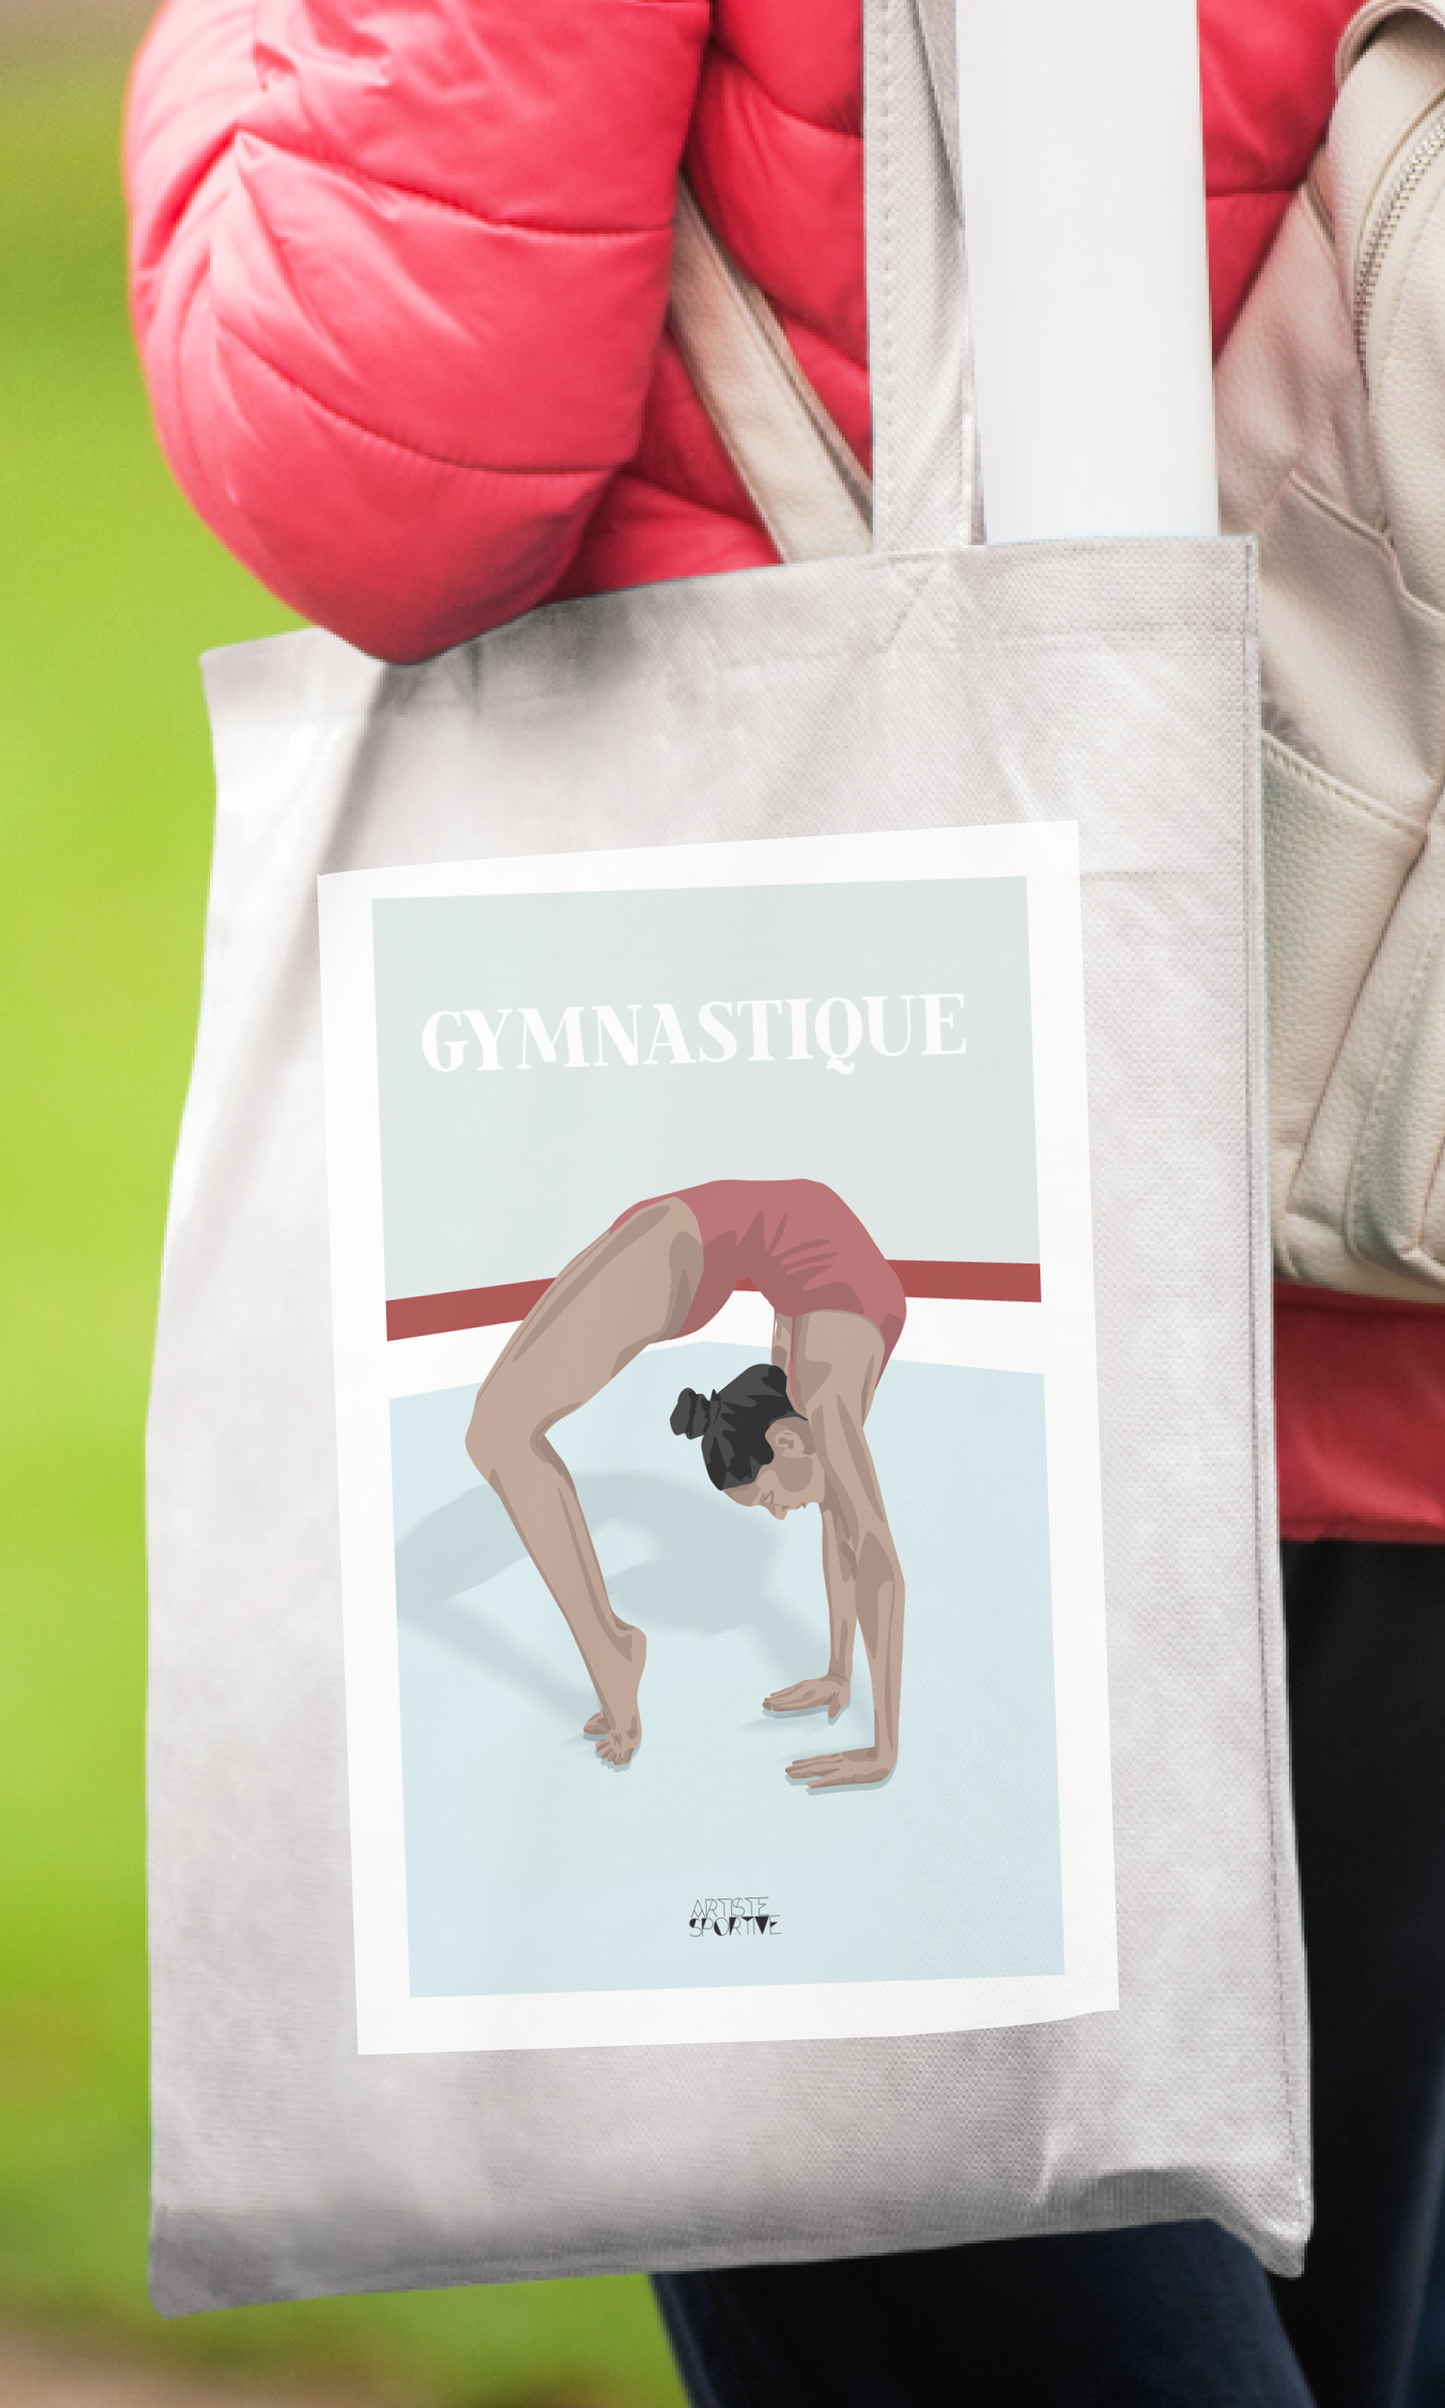 Tote bag or gymnastics bag “The bridge”